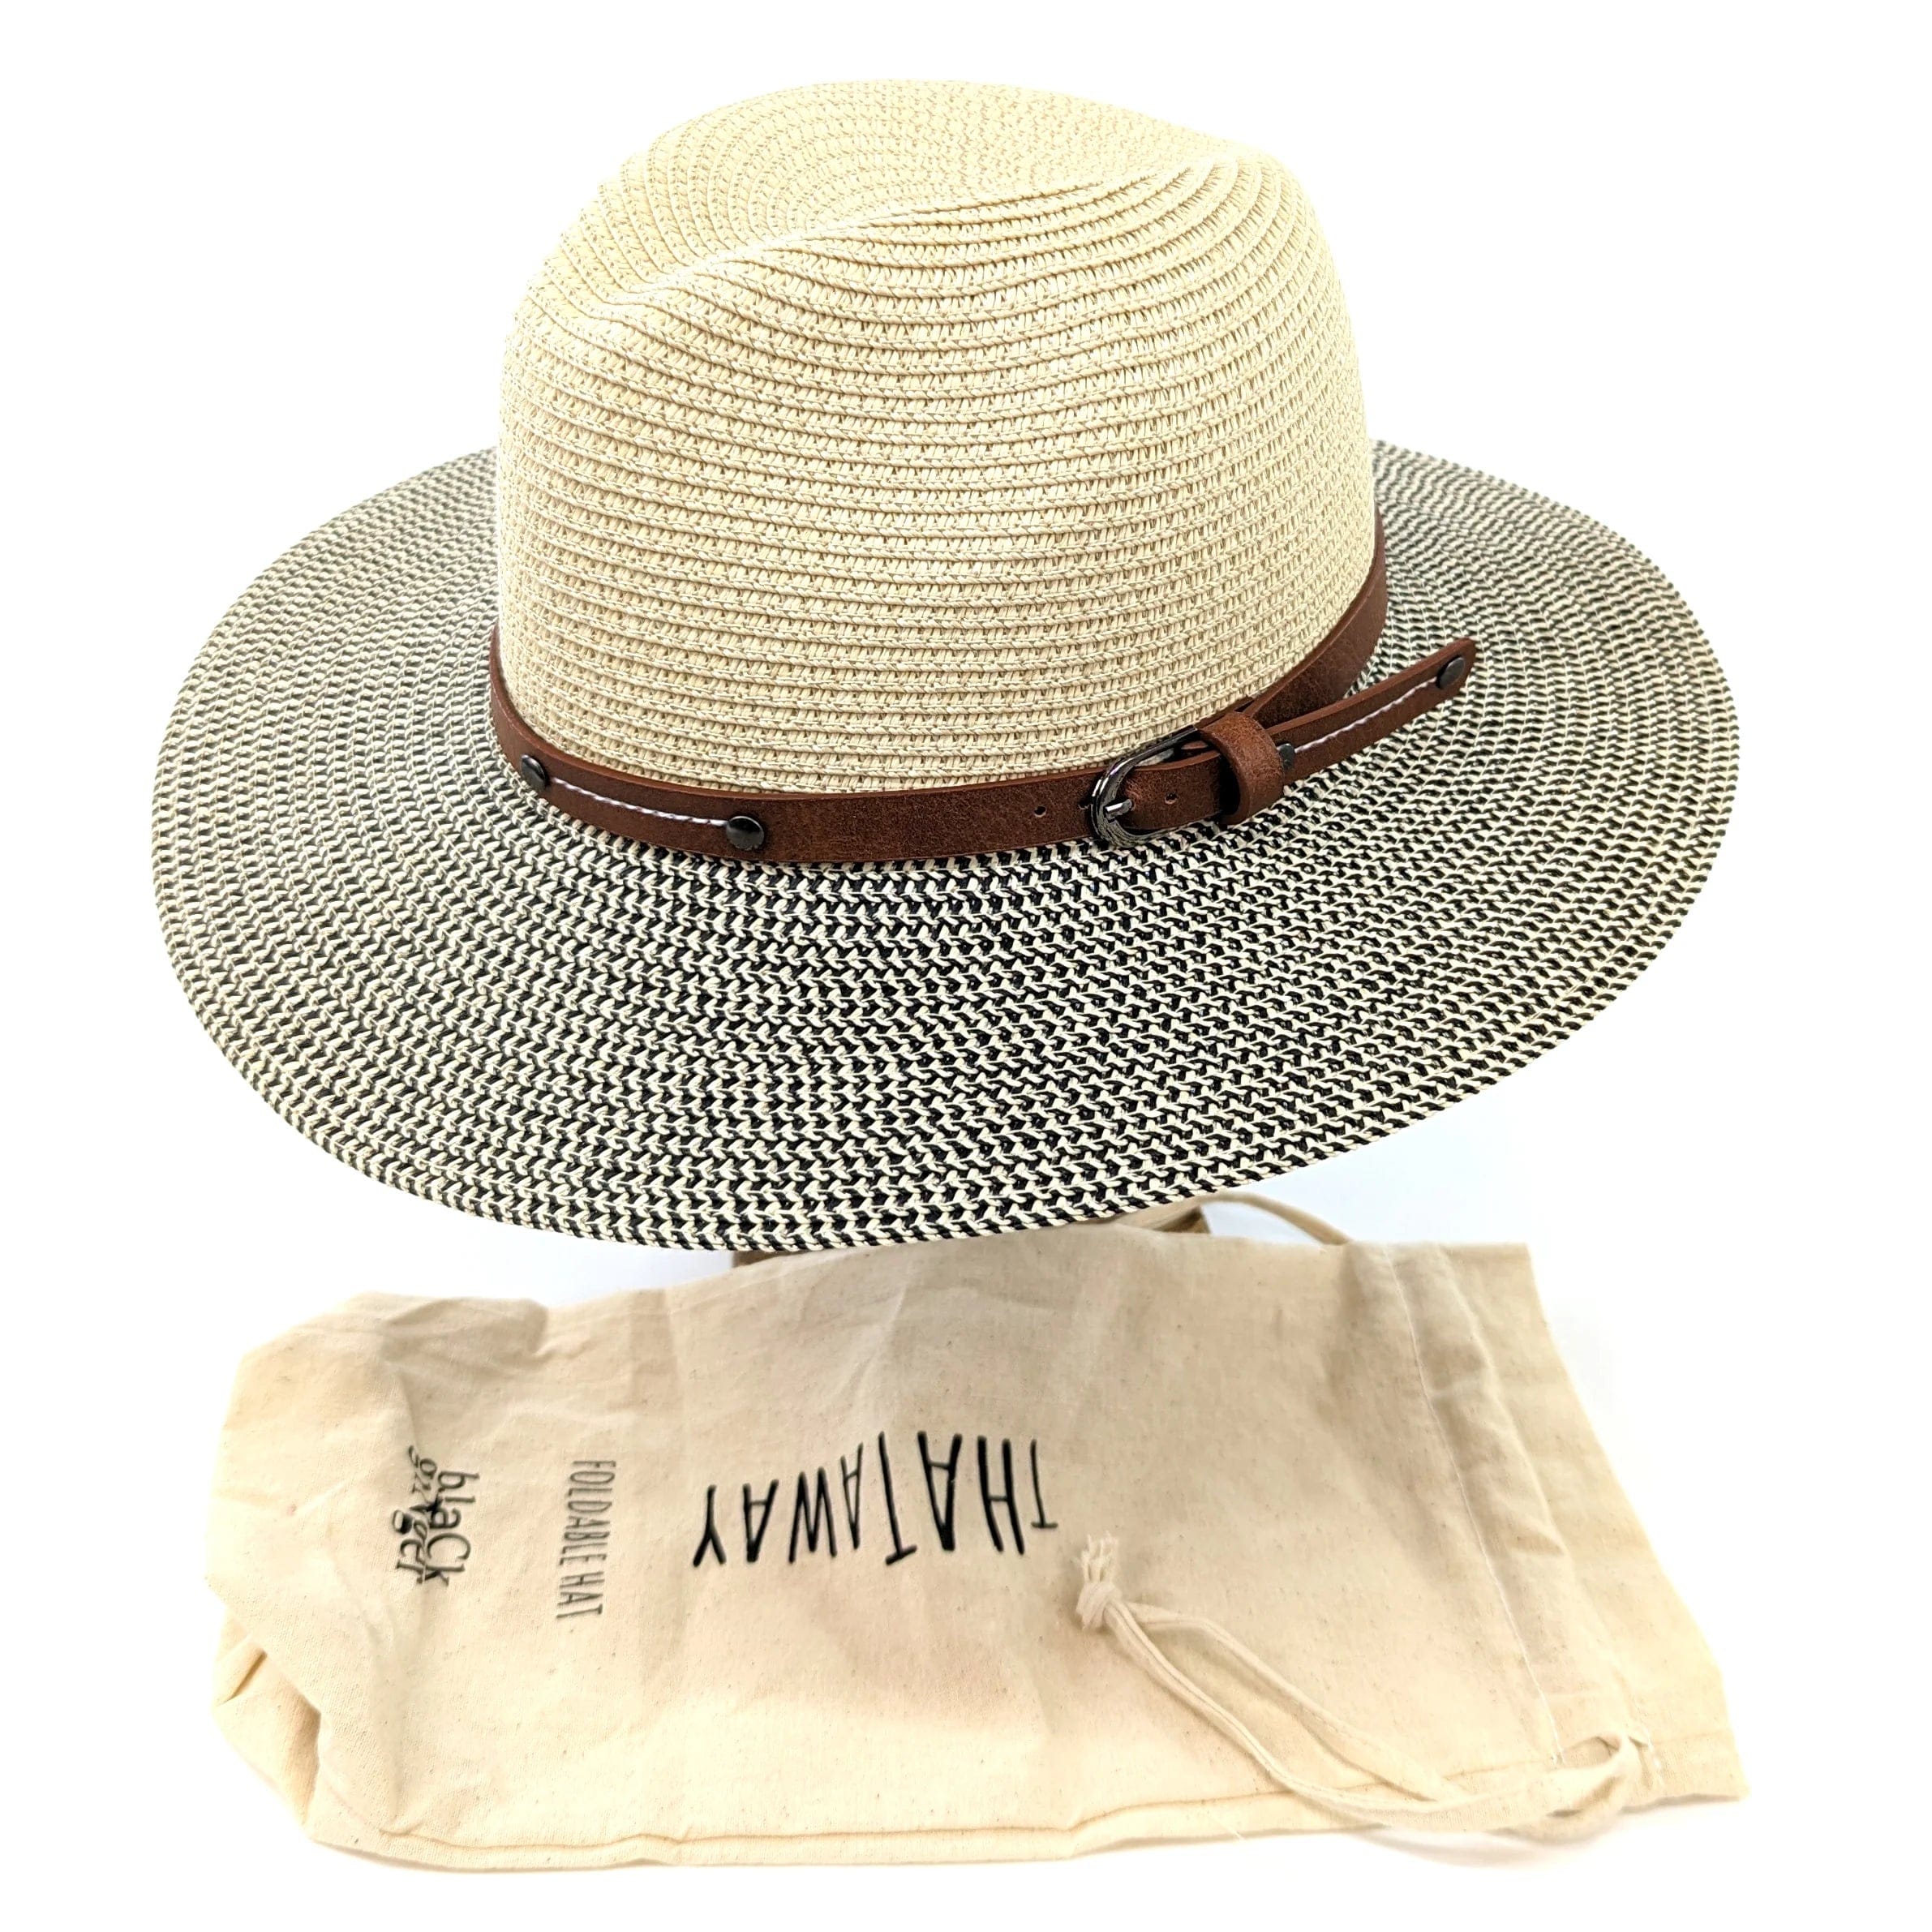 Packable Panama Travel Sun Hat With Belt Design - Foldable Mottled/Natural